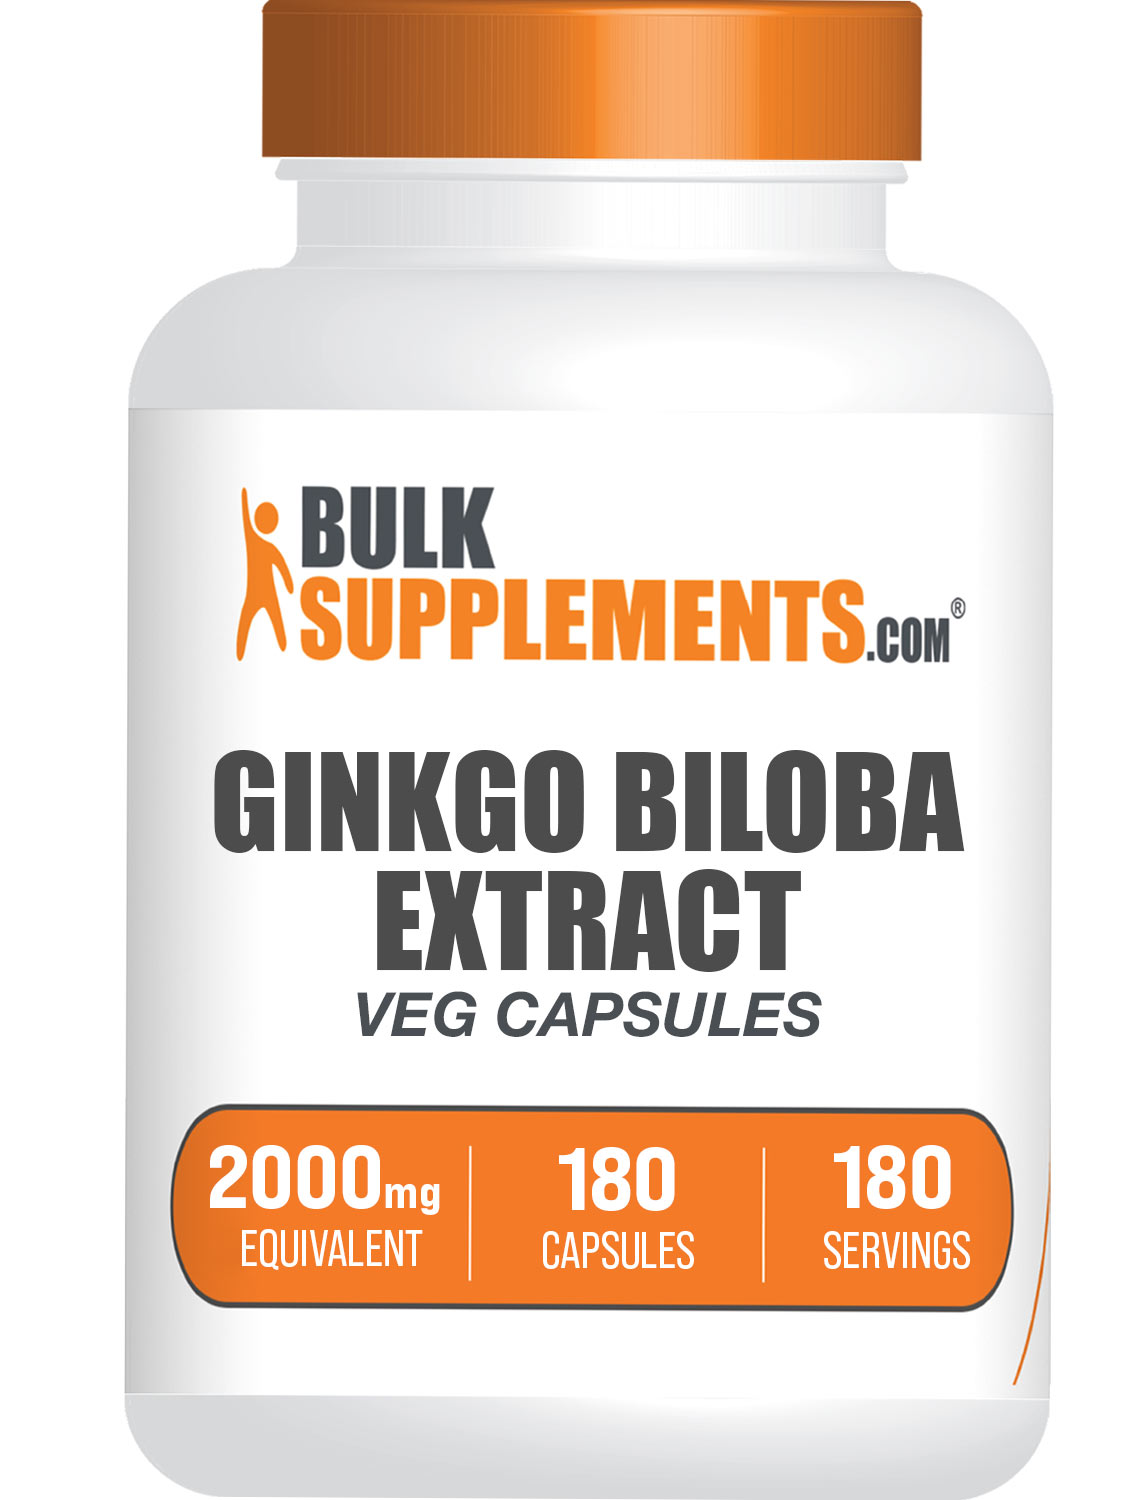 Ginkgo biloba extract capsules 180 ct bottle